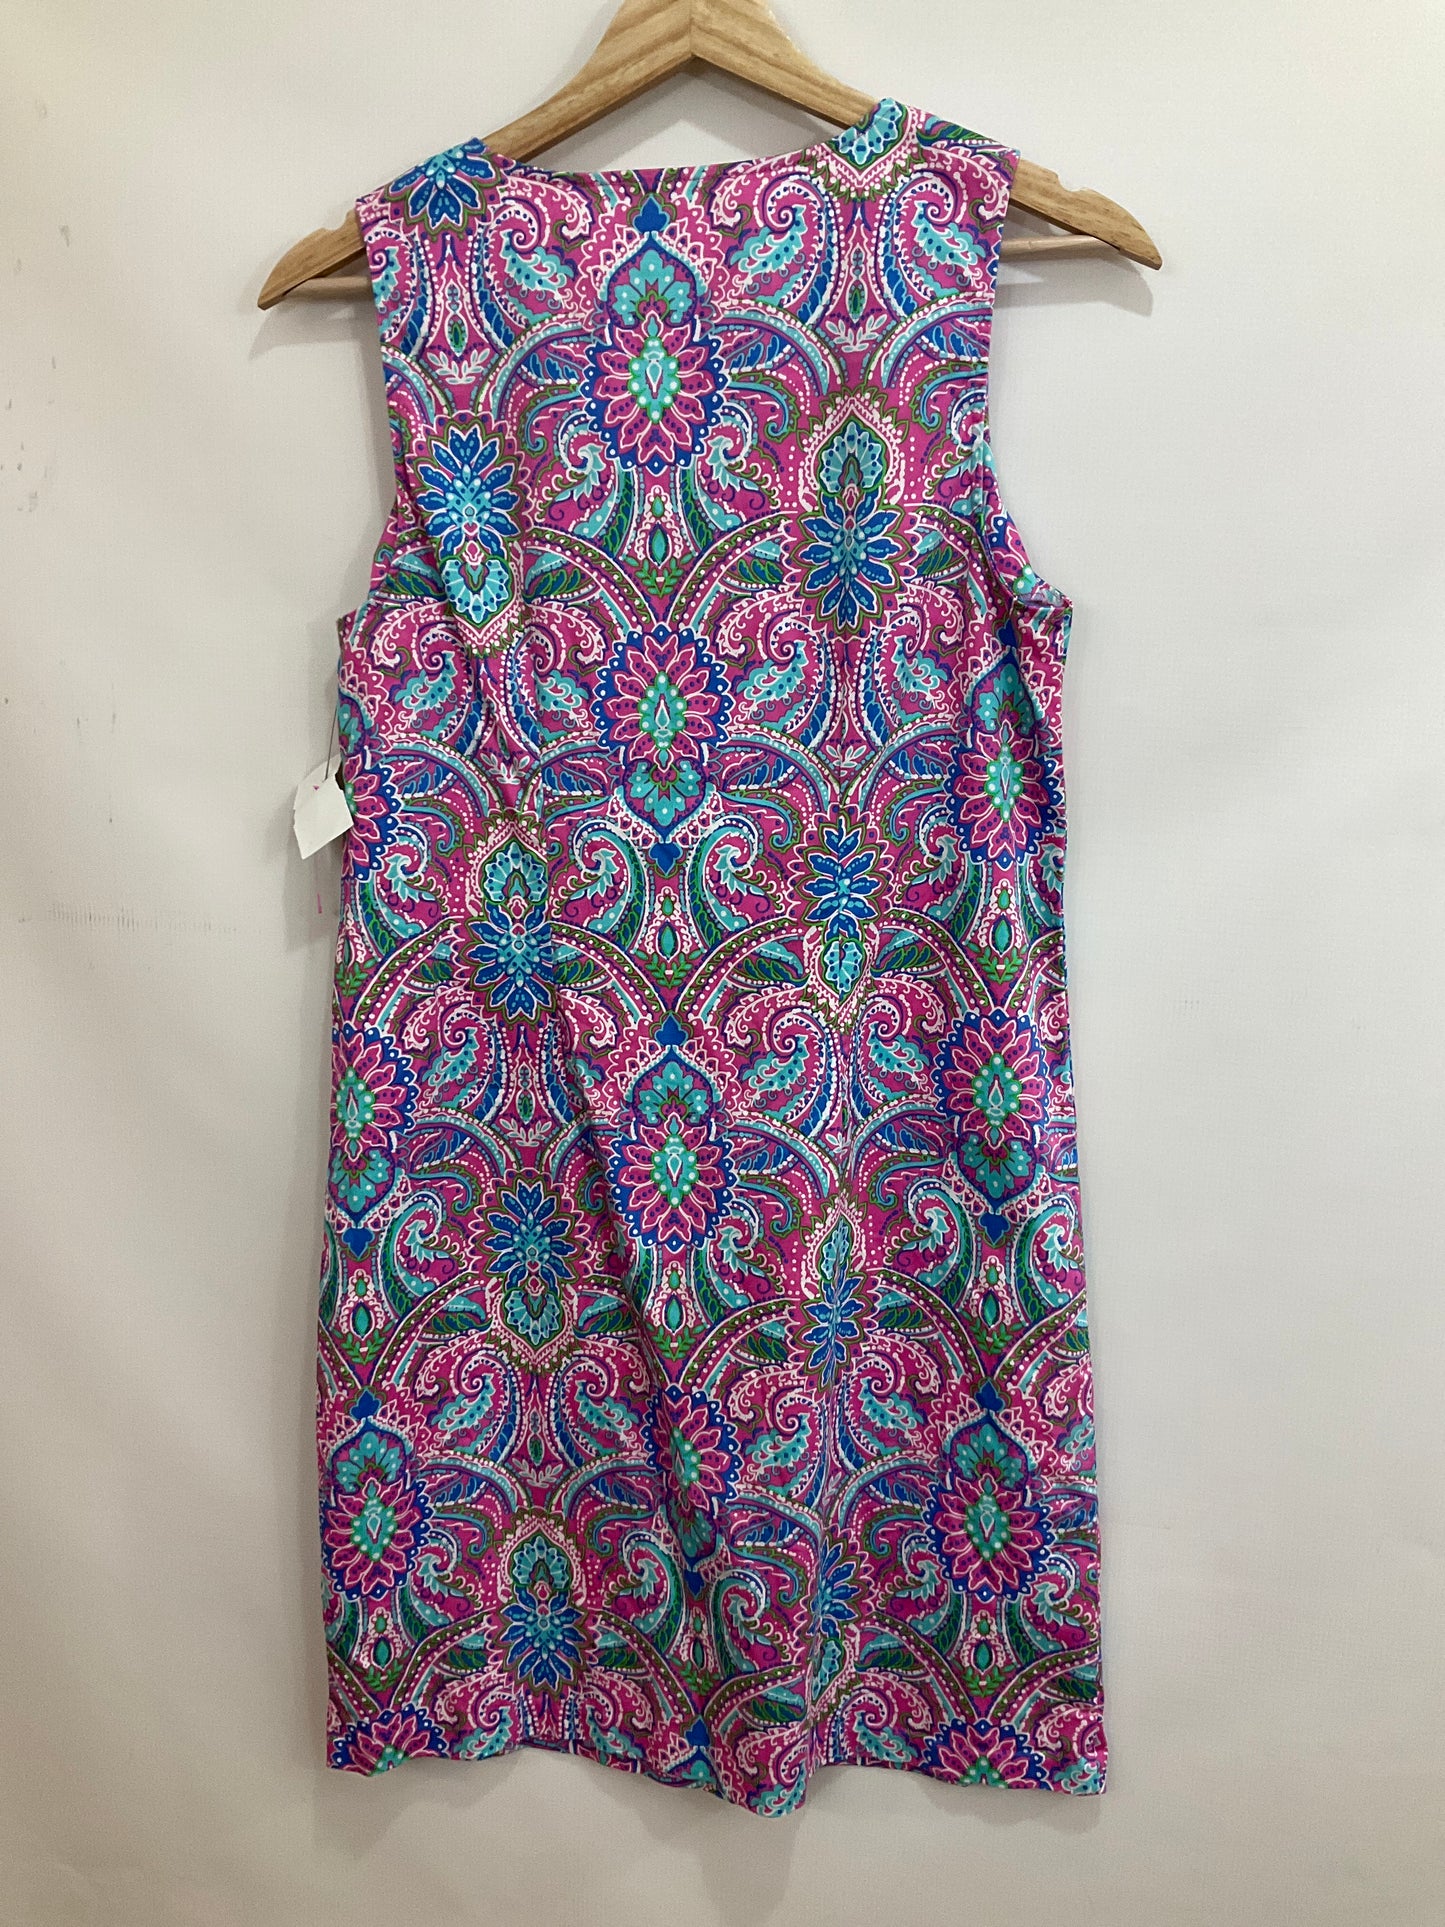 Dress Casual Short By Cynthia Rowley  Size: 4